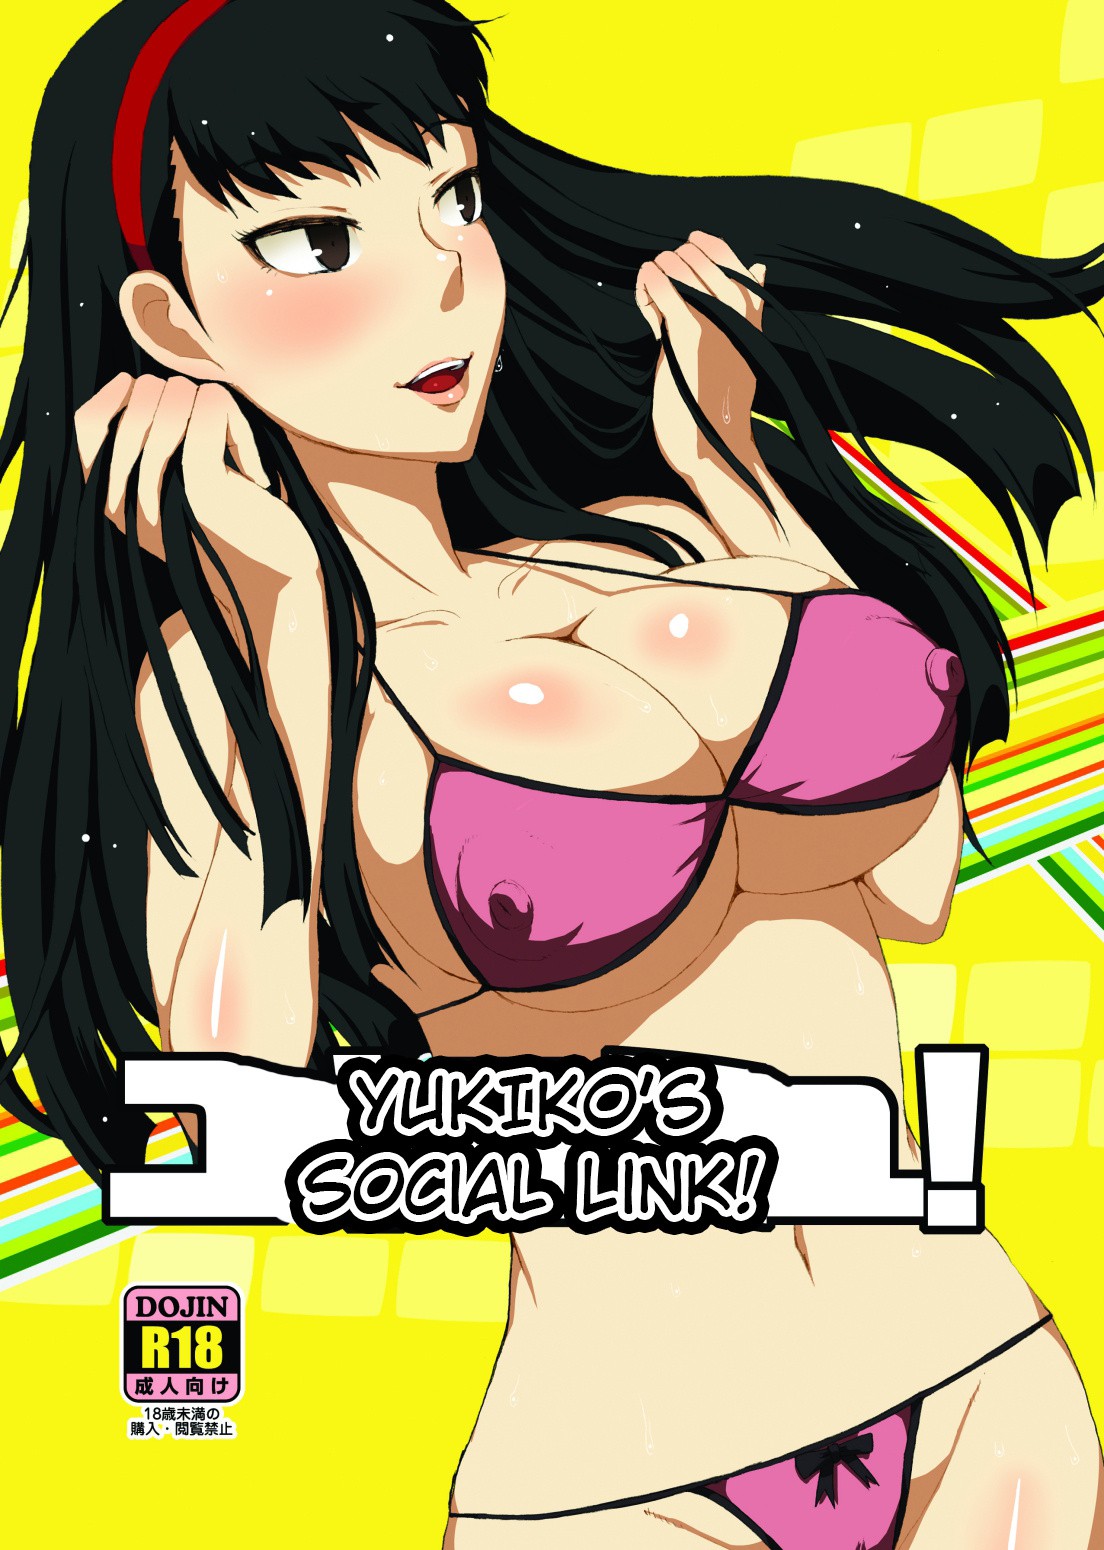 Yukiko’s Social Link!